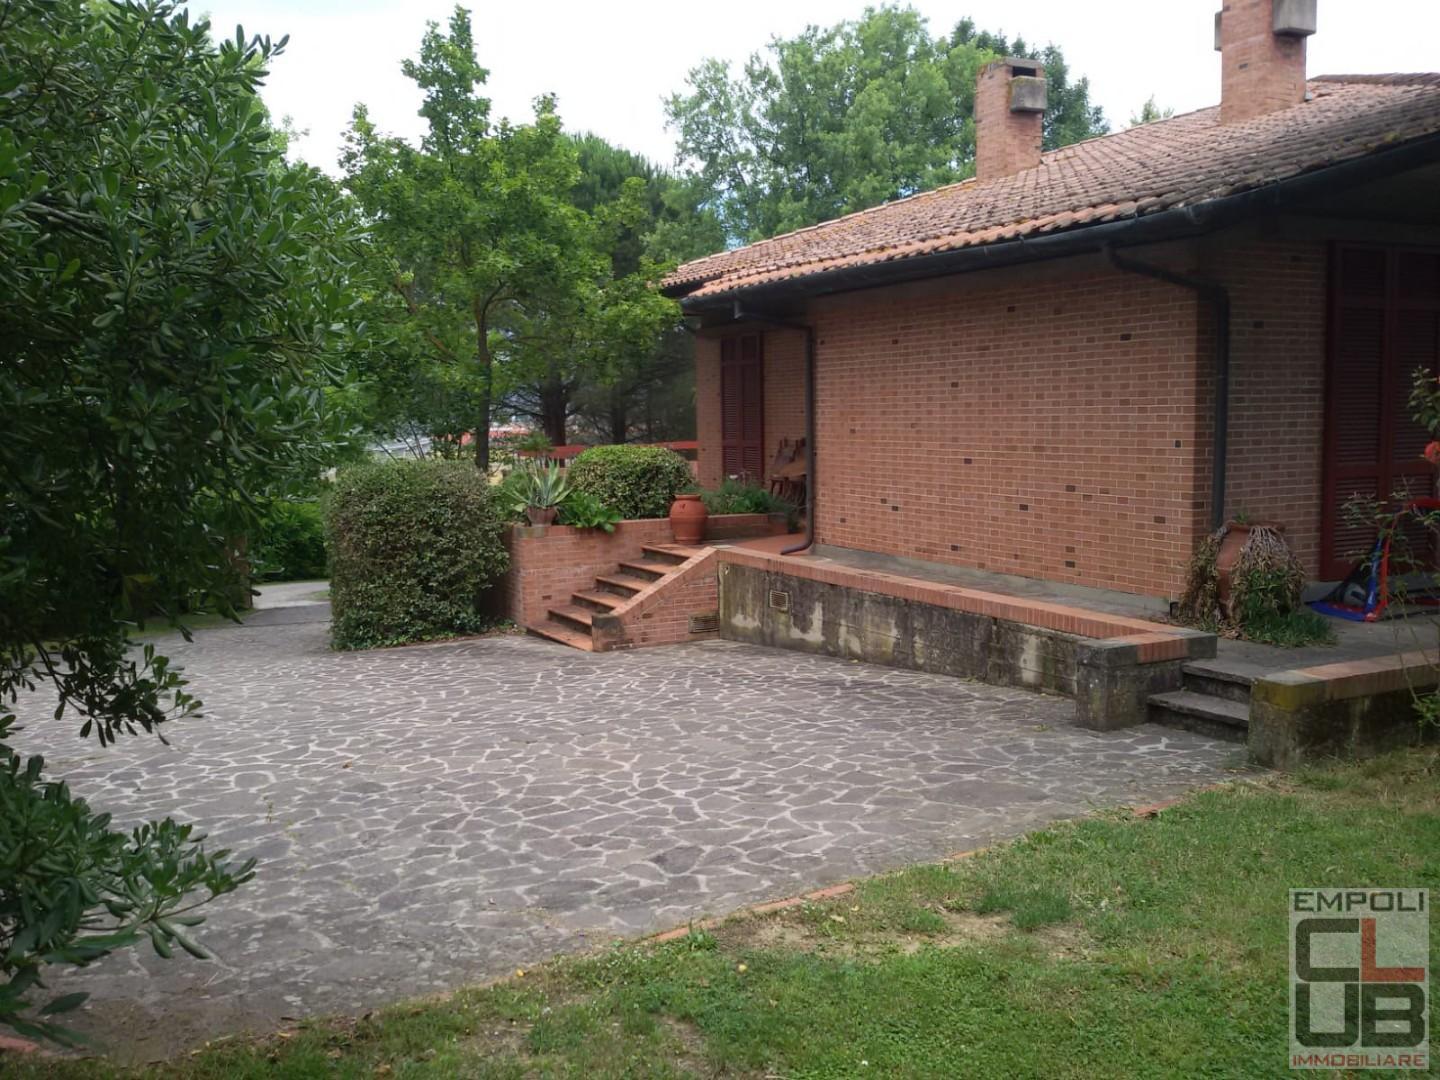 Villa con giardino, Empoli corniola